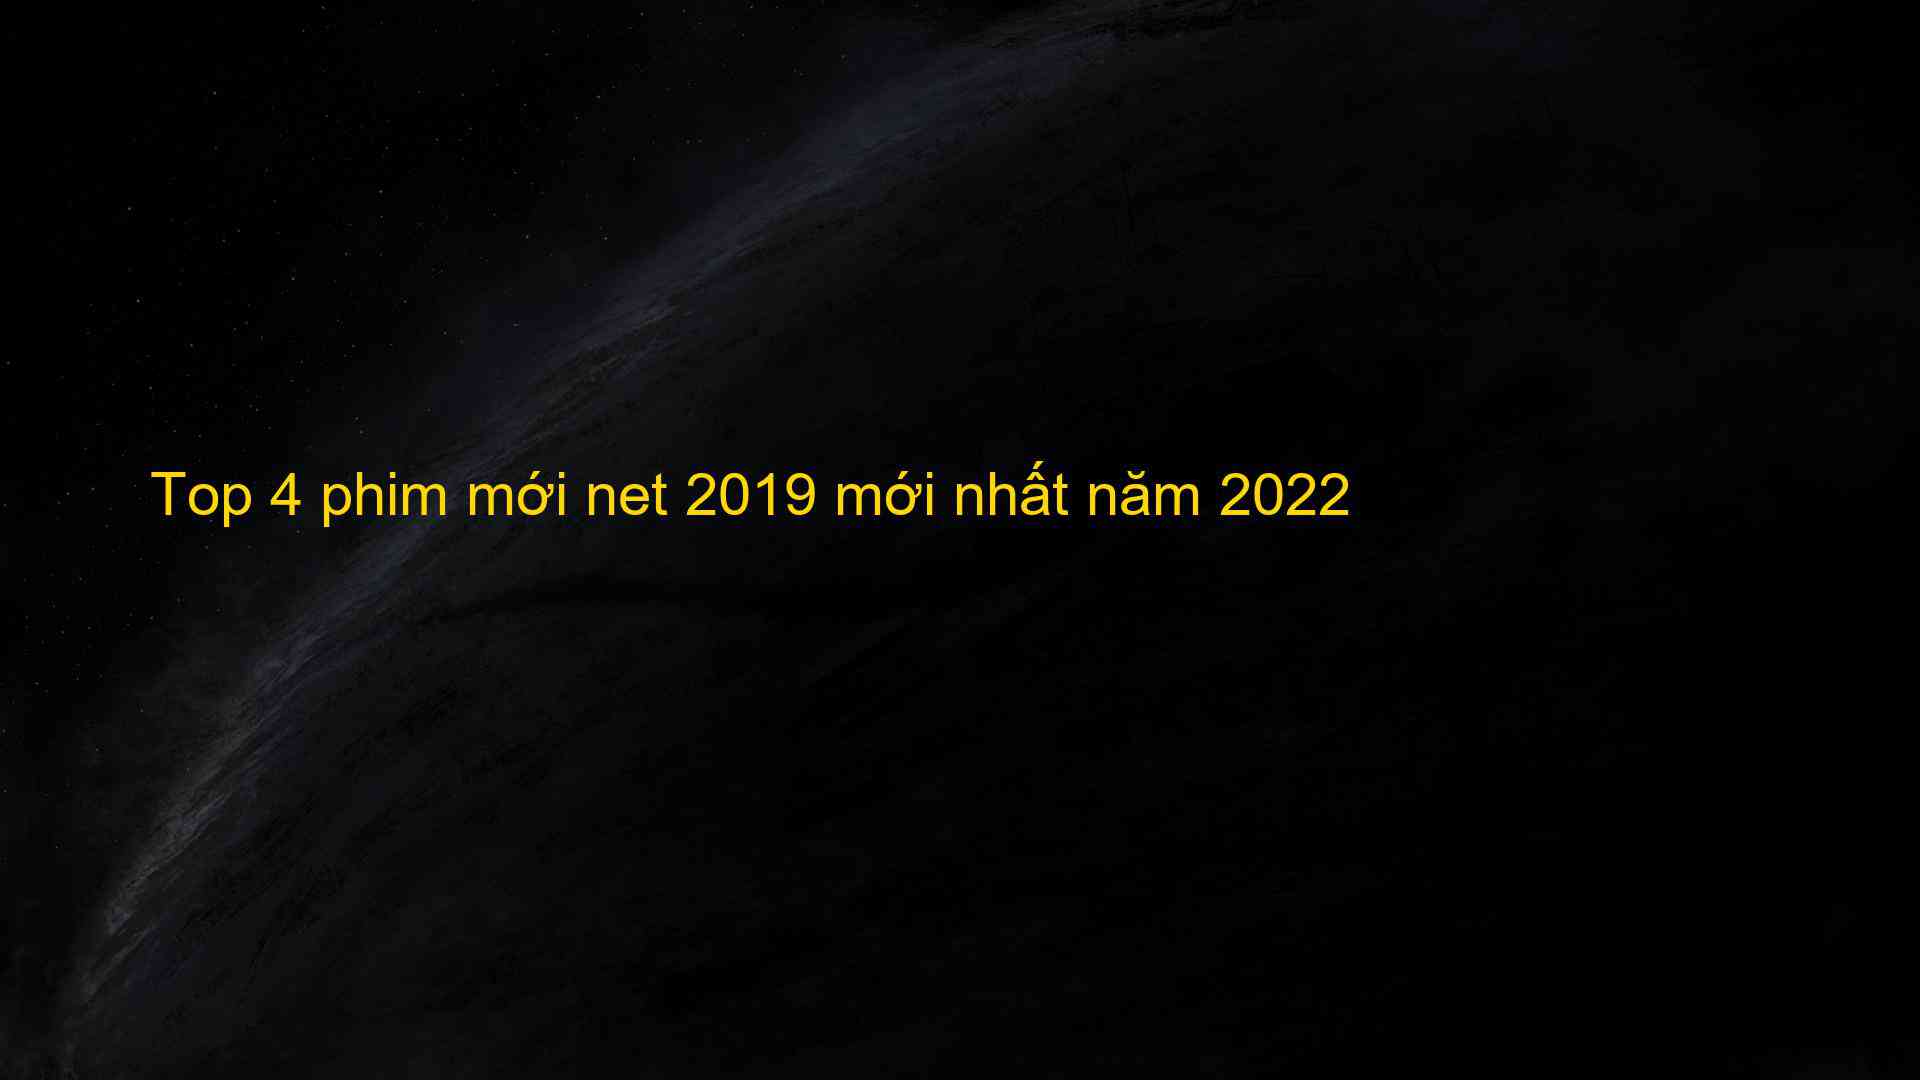 Top 4 phim mới net 2019 mới nhất năm 2022 - EU-Vietnam Business Network (EVBN)